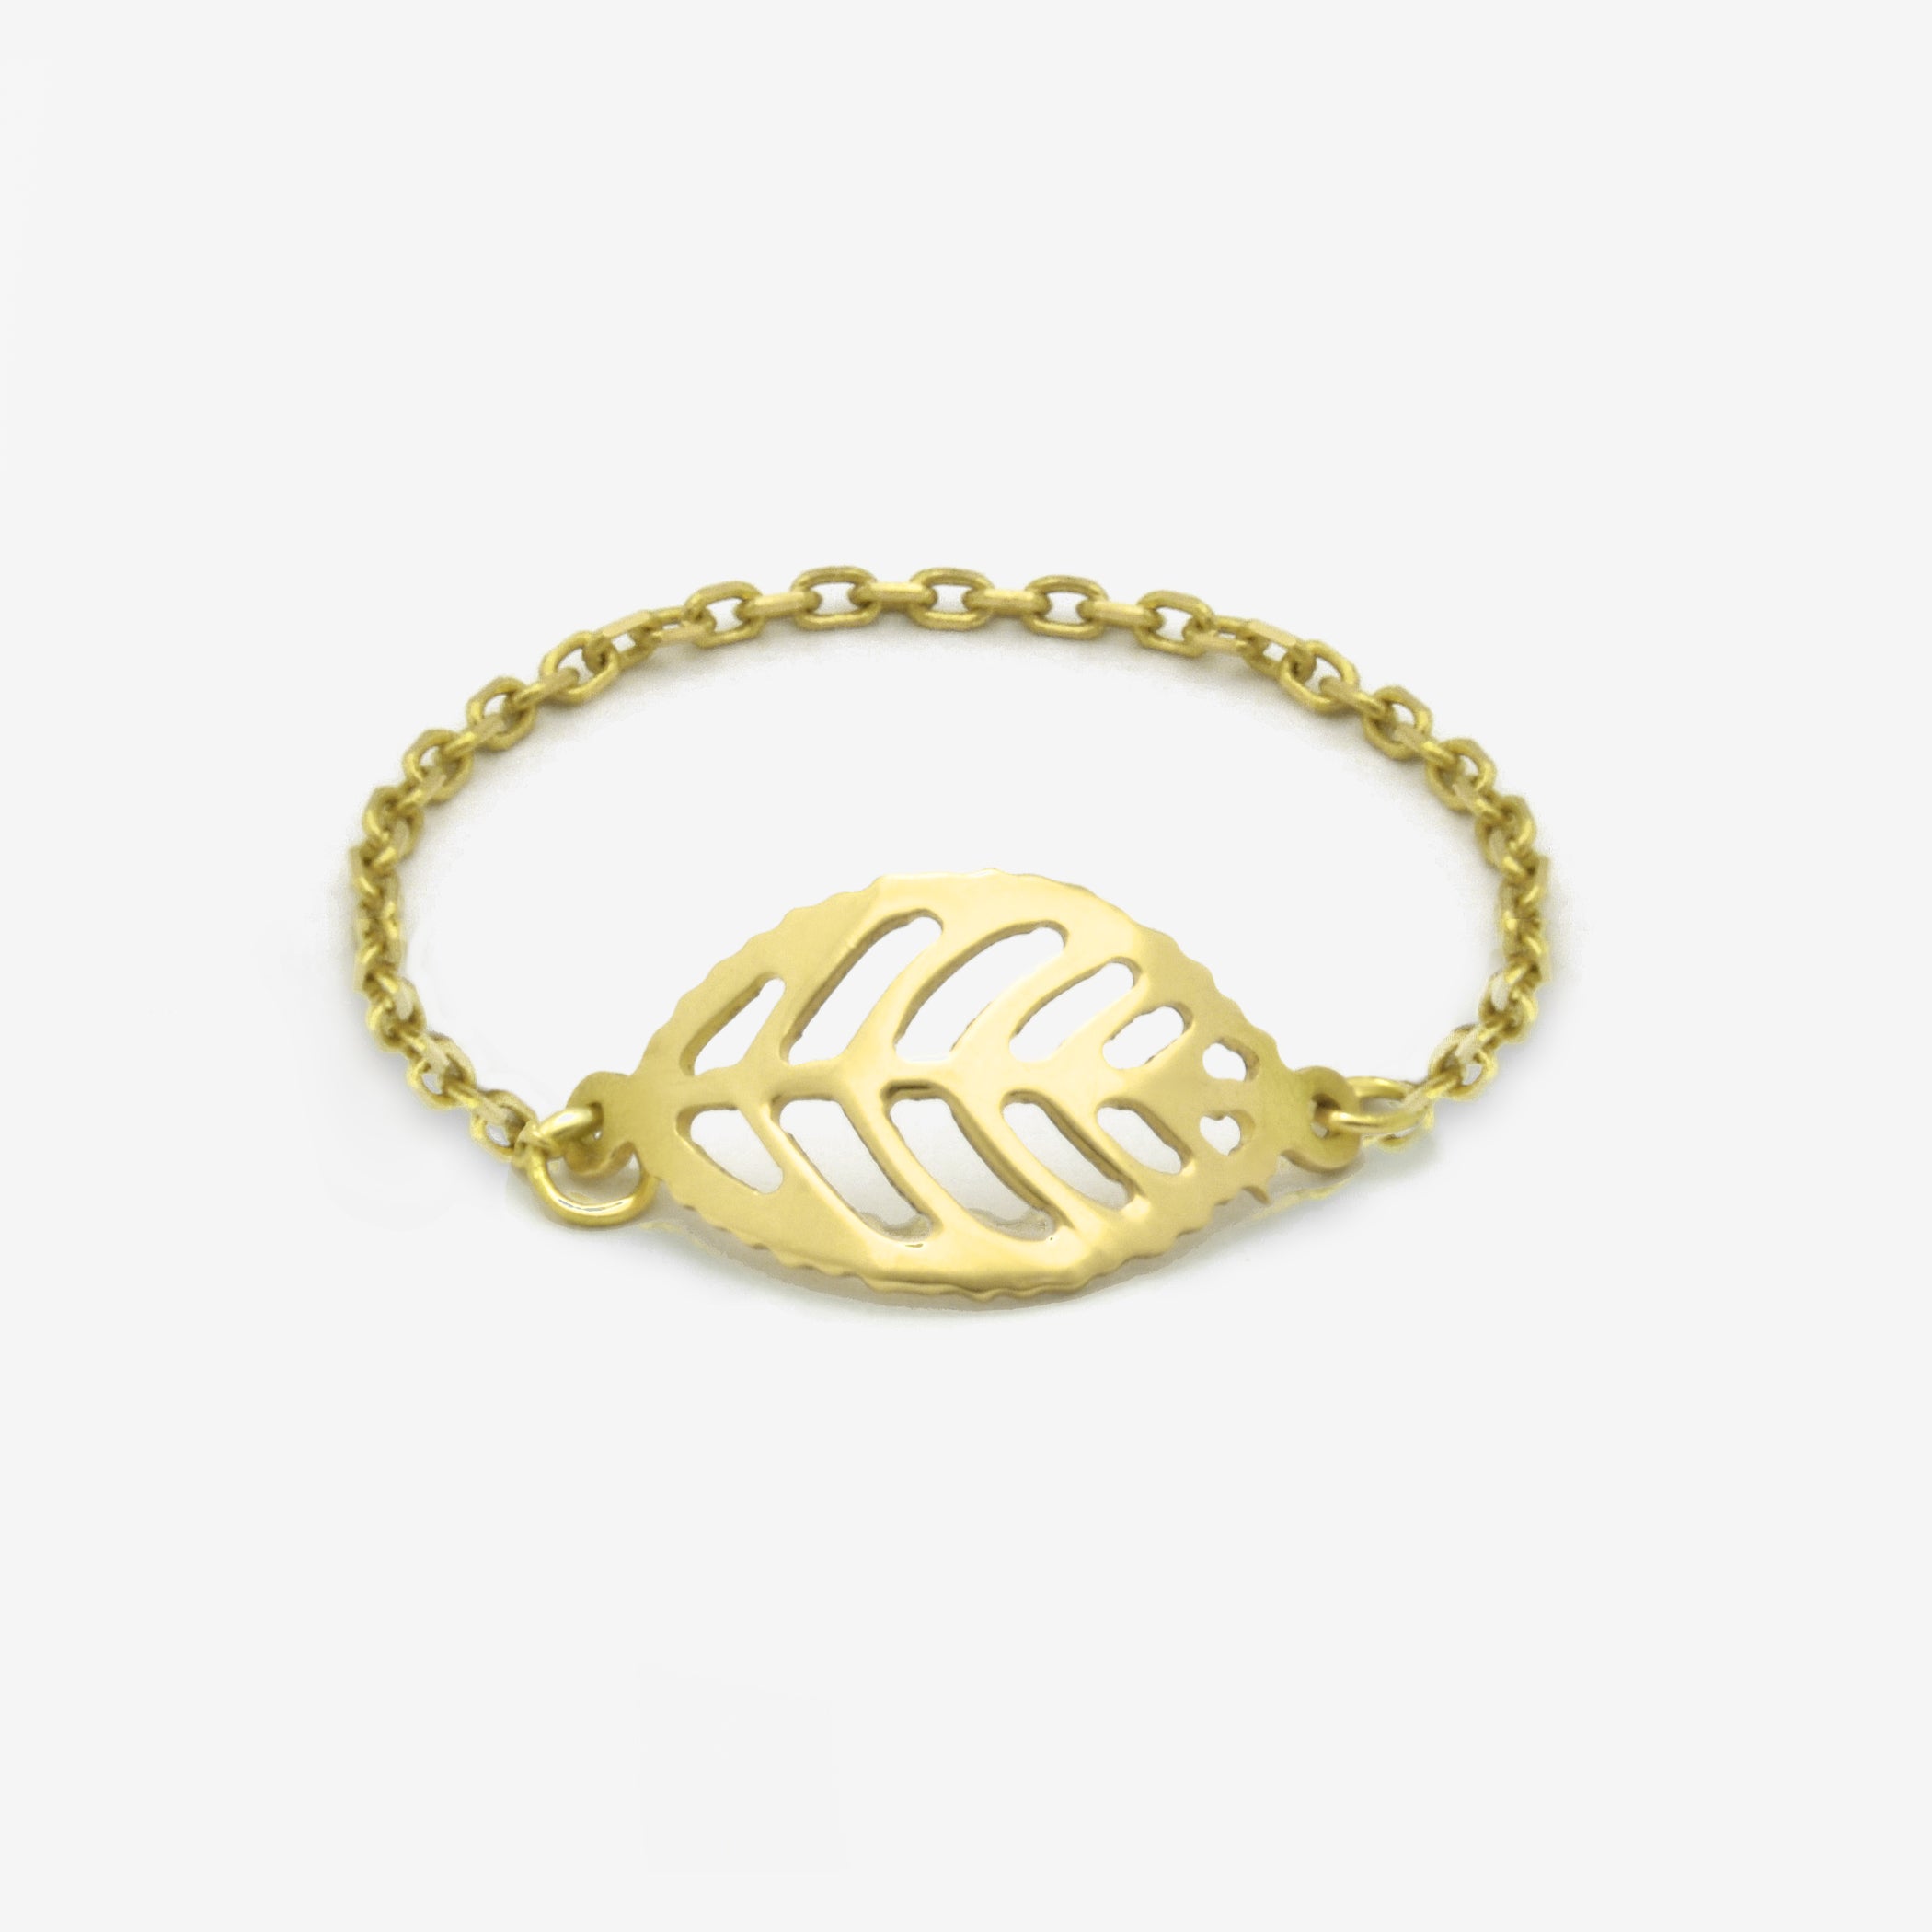 Leaf Catena Ring - by Claurete Jewelry at Claurete.com